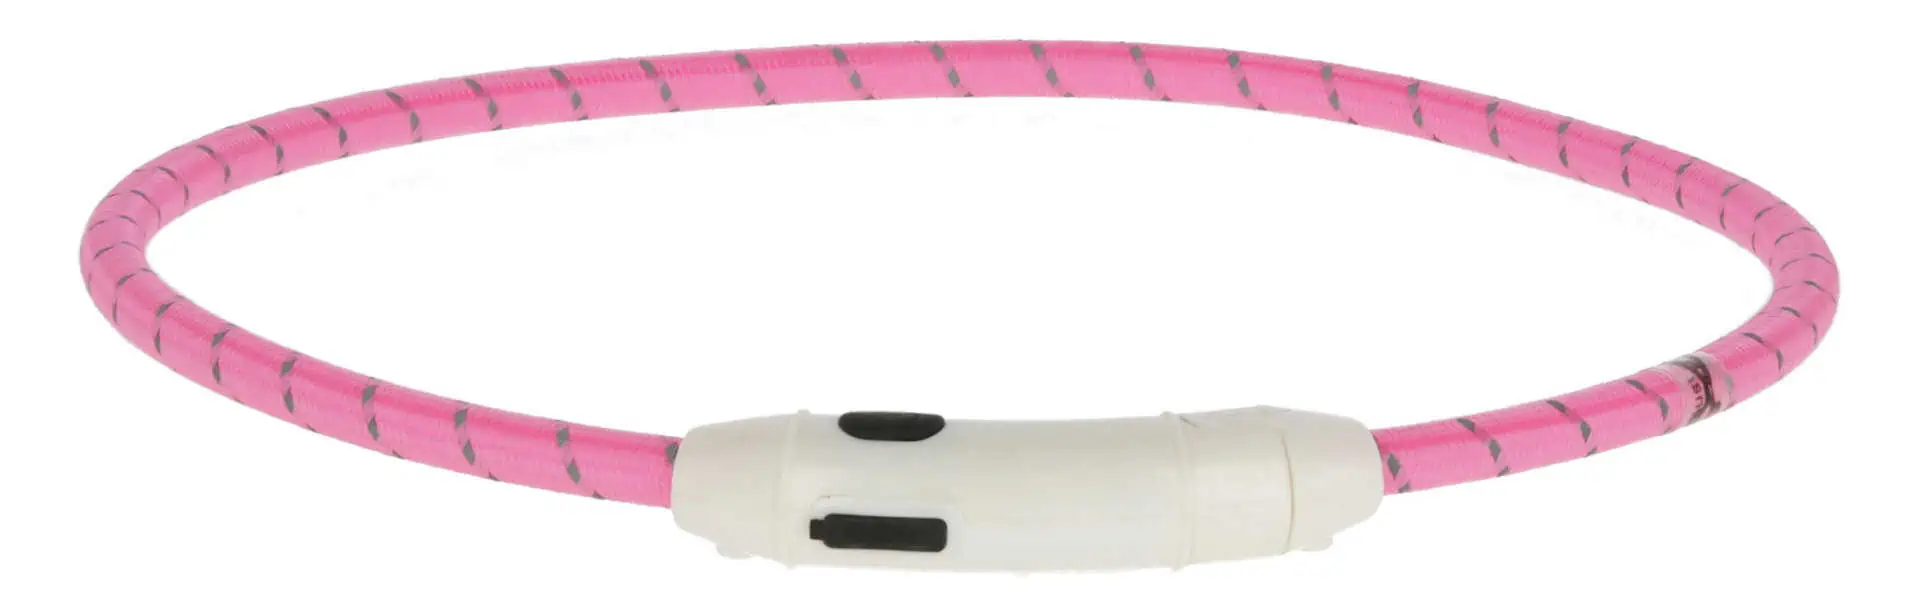 Maxi Safe LED nyakörv nylon hossza 65 cm